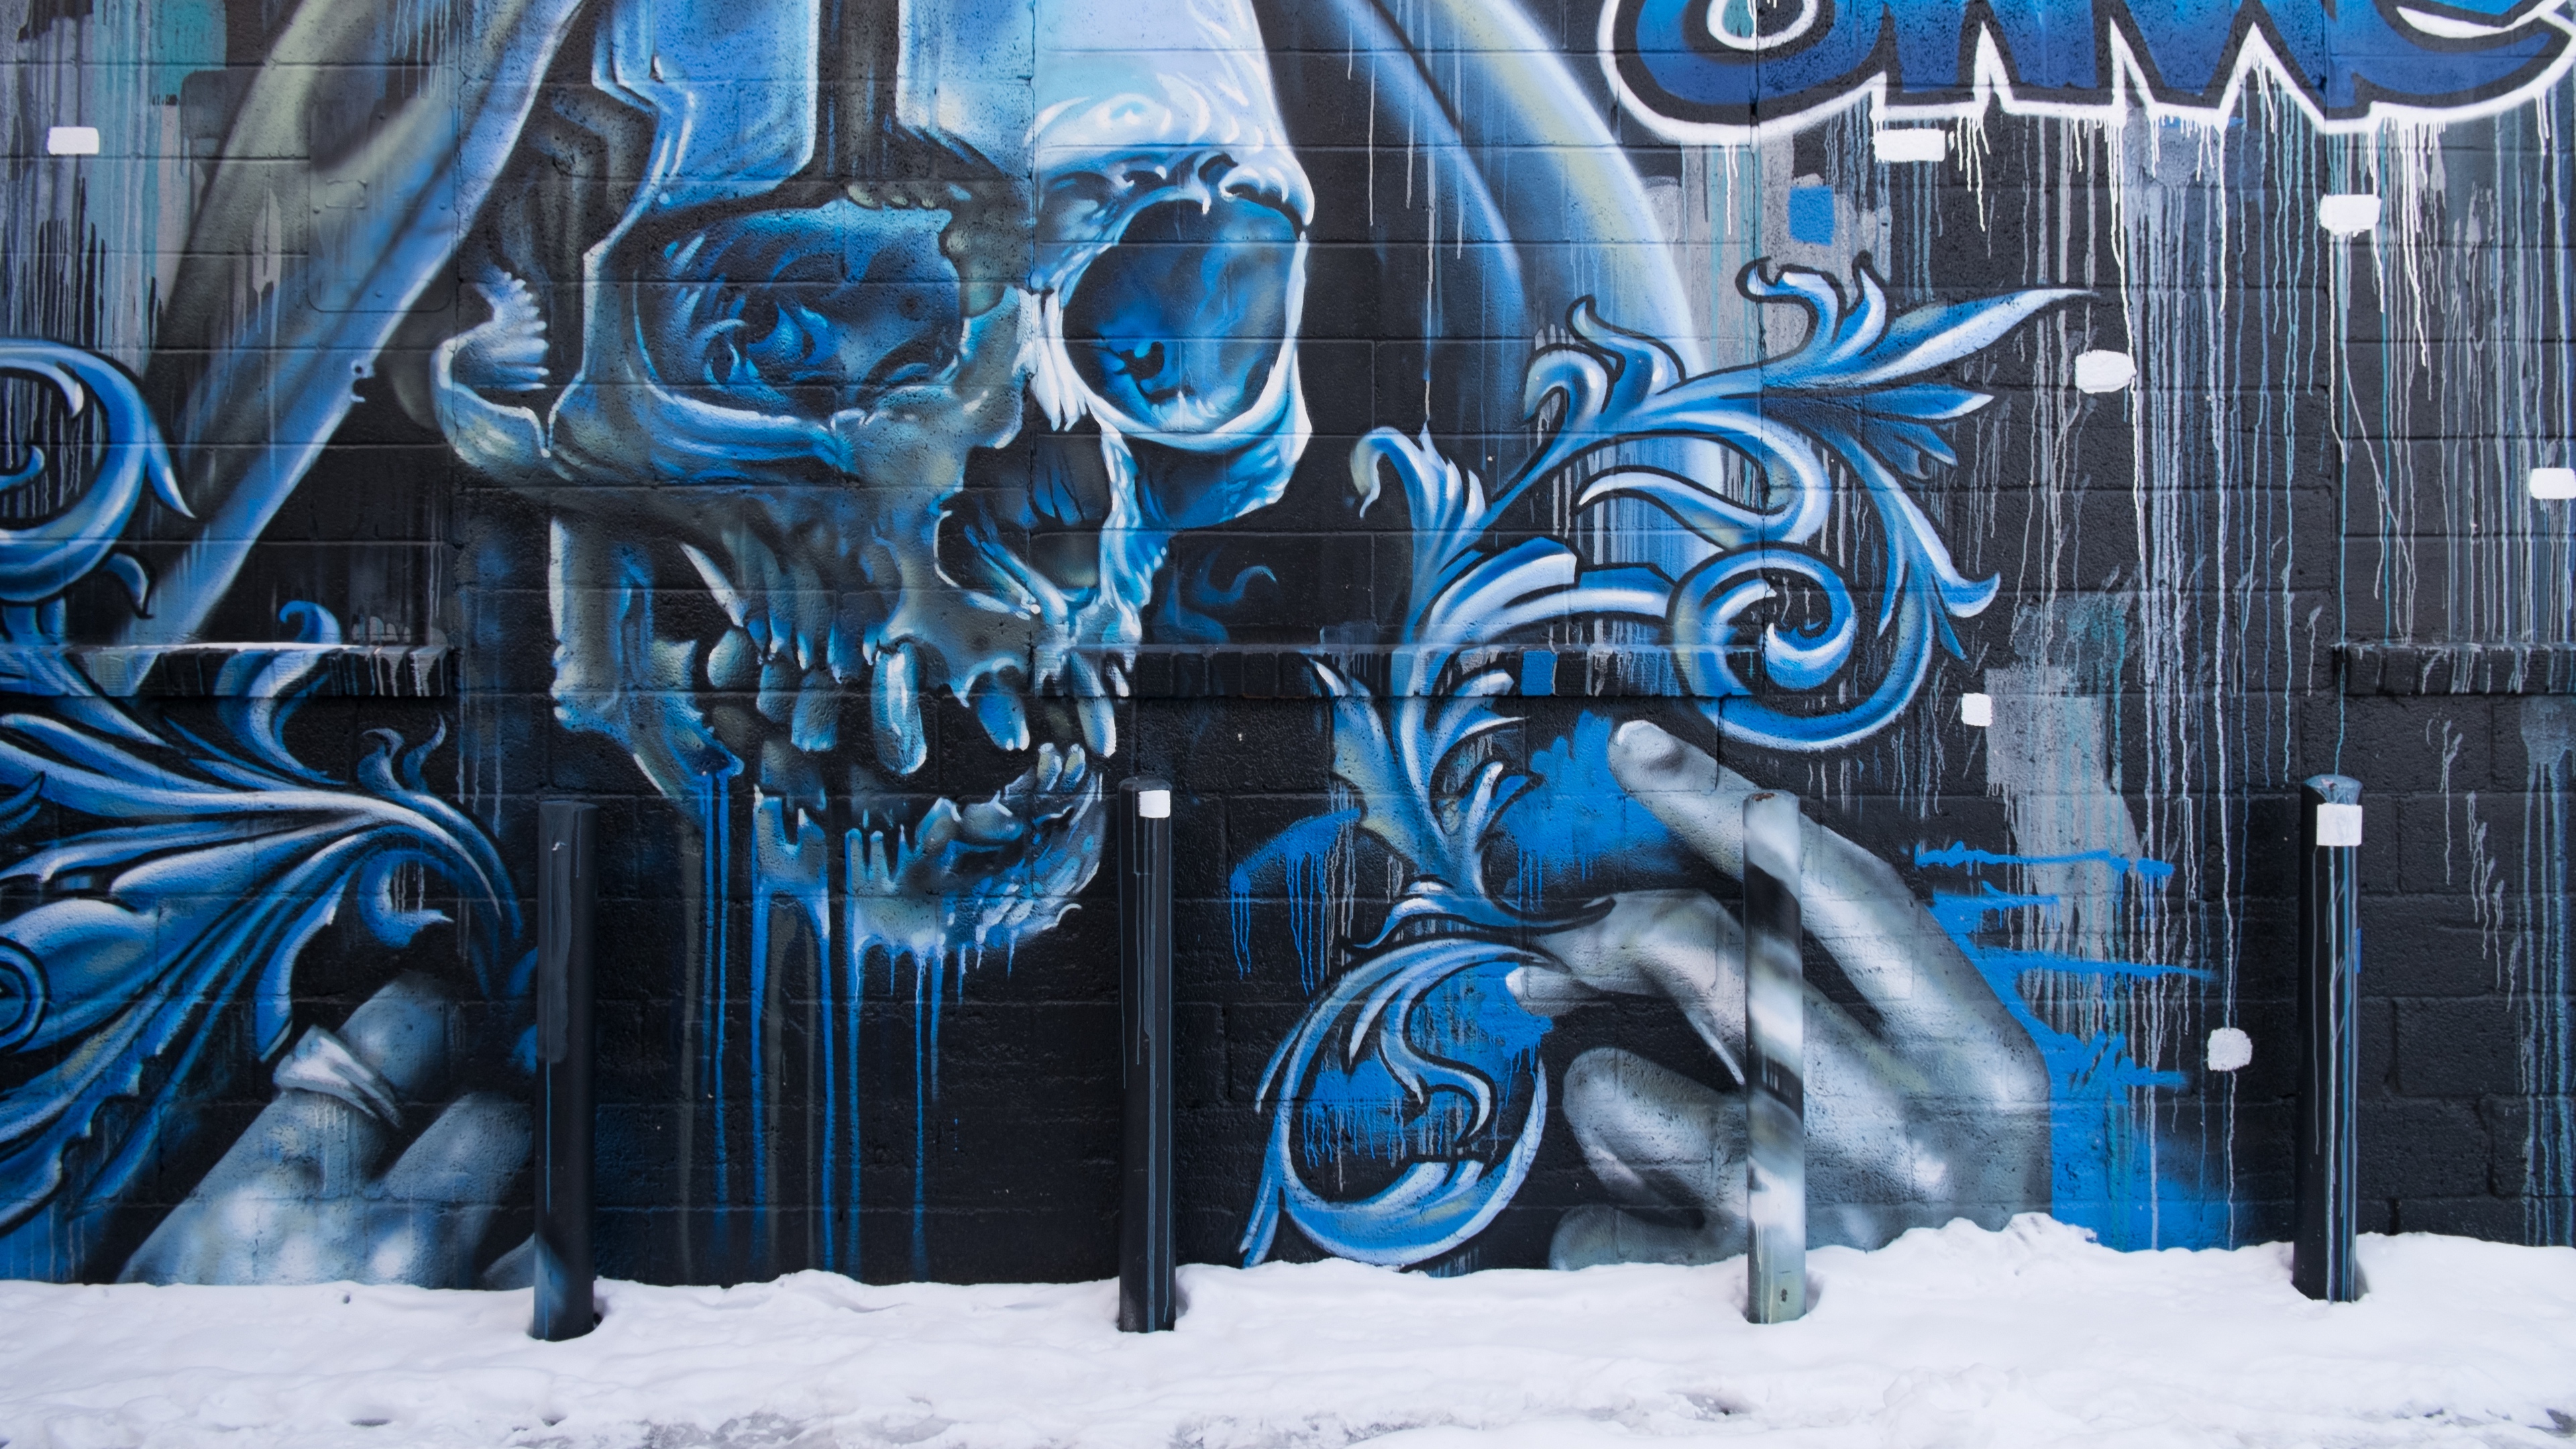 Download Skull Graffiti Street Art Wall 4k - Street Art Background